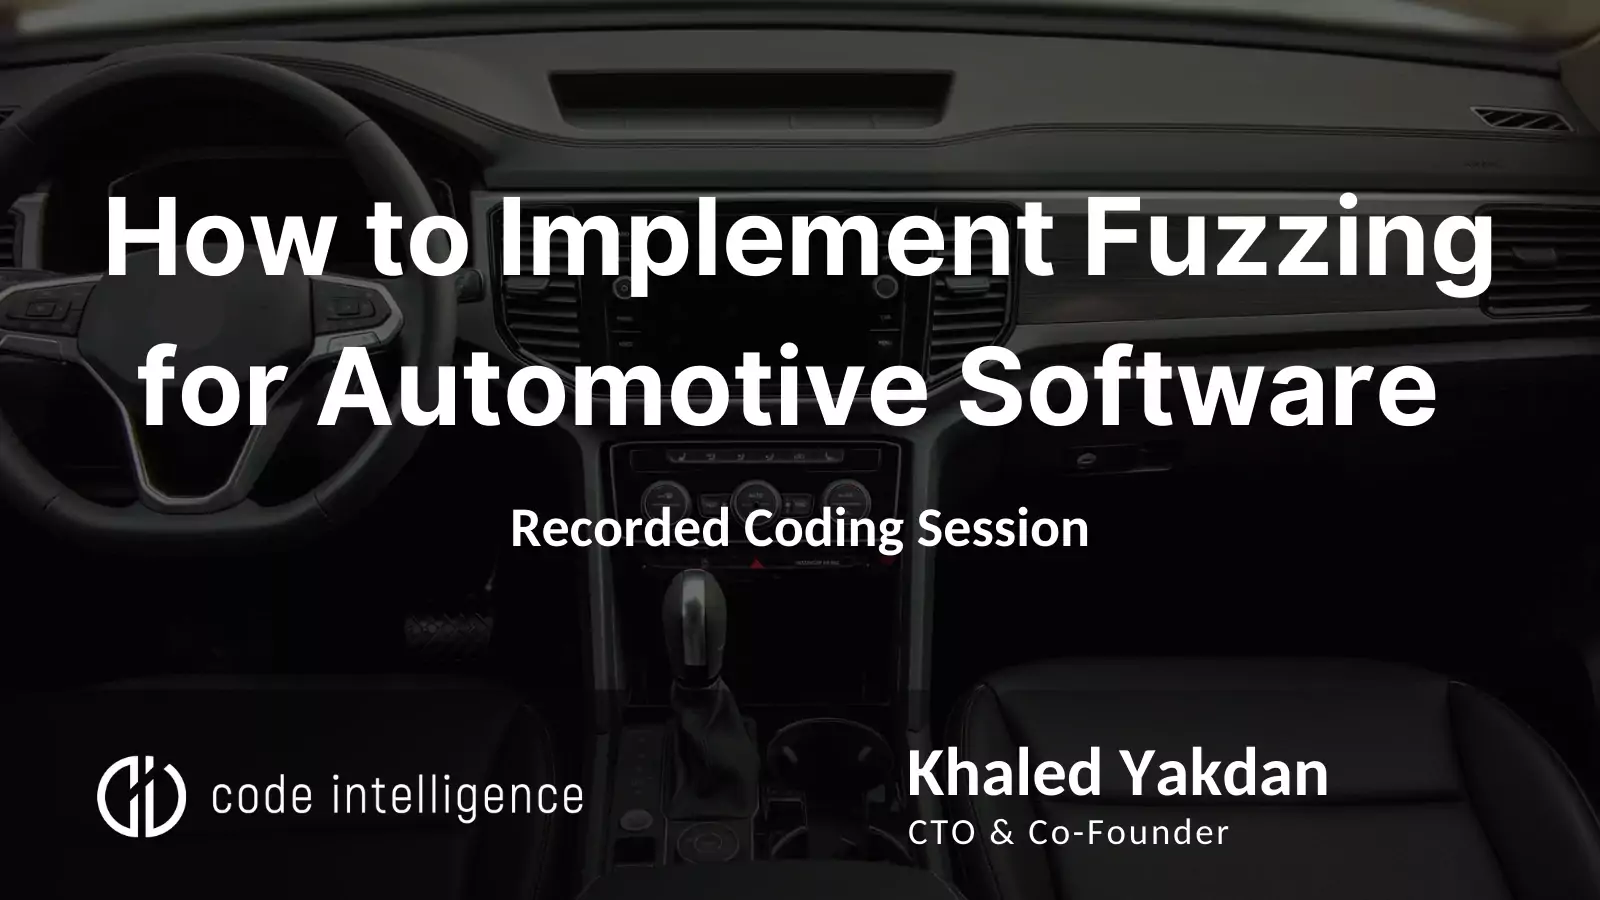 Fuzzing Automotive Software